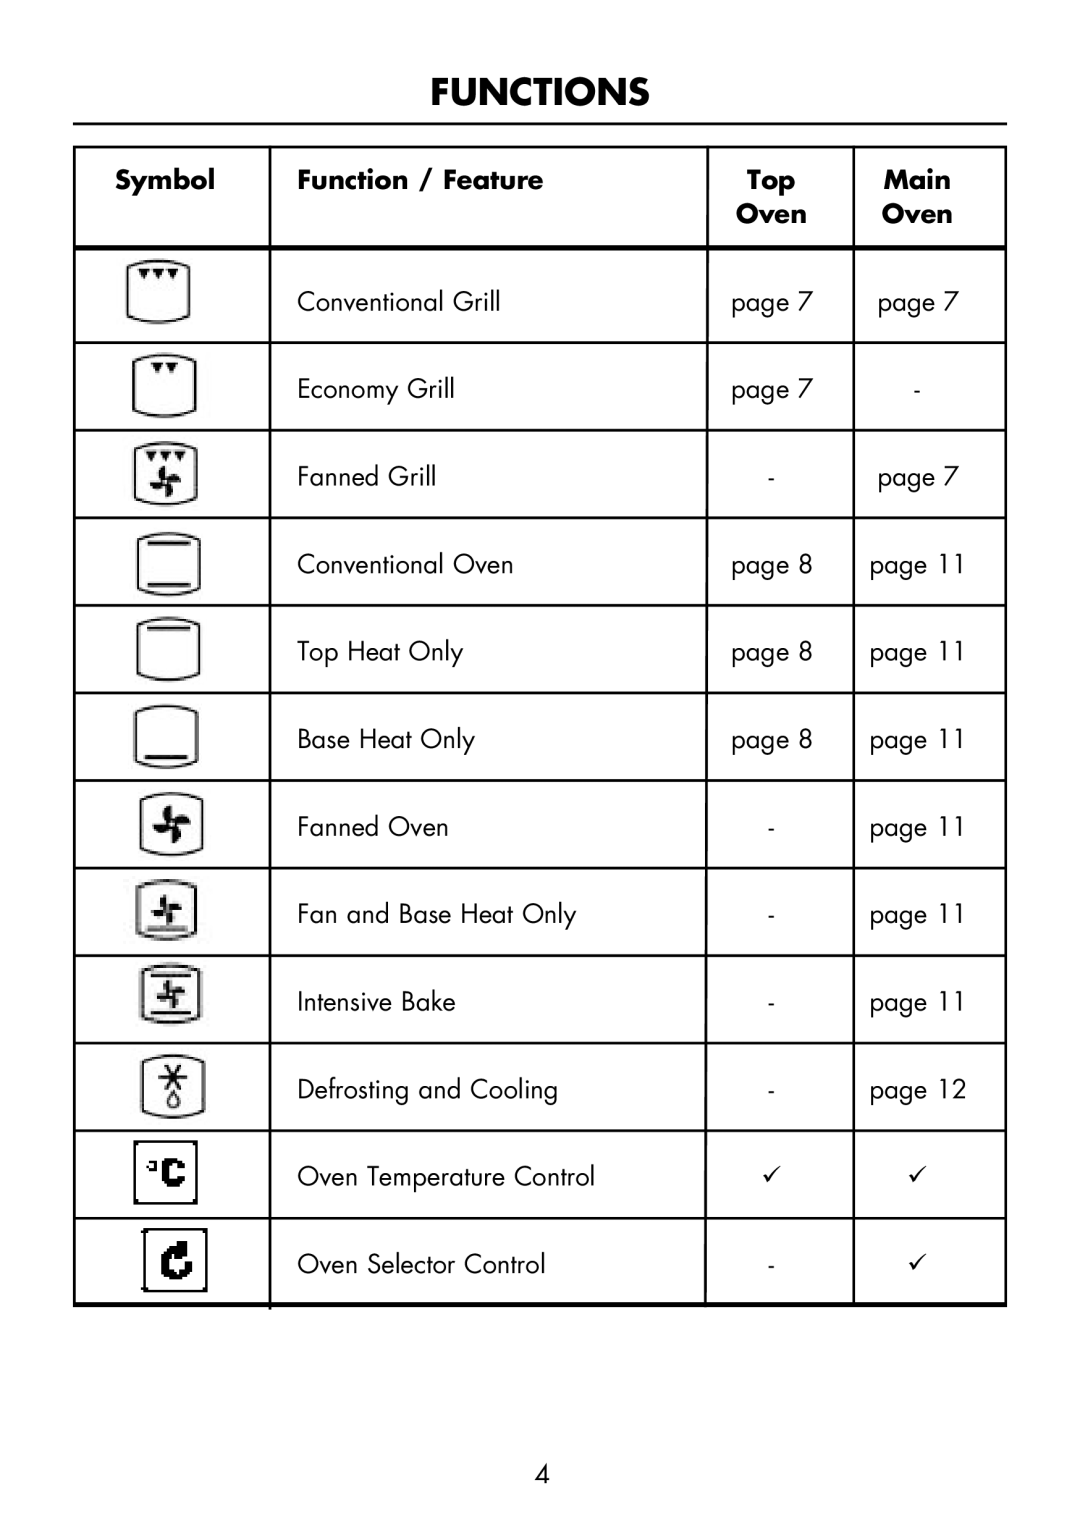 Glen Dimplex Home Appliances Ltd BI 90 MF manual Functions, Symbol, Function / Feature, Main, Oven 